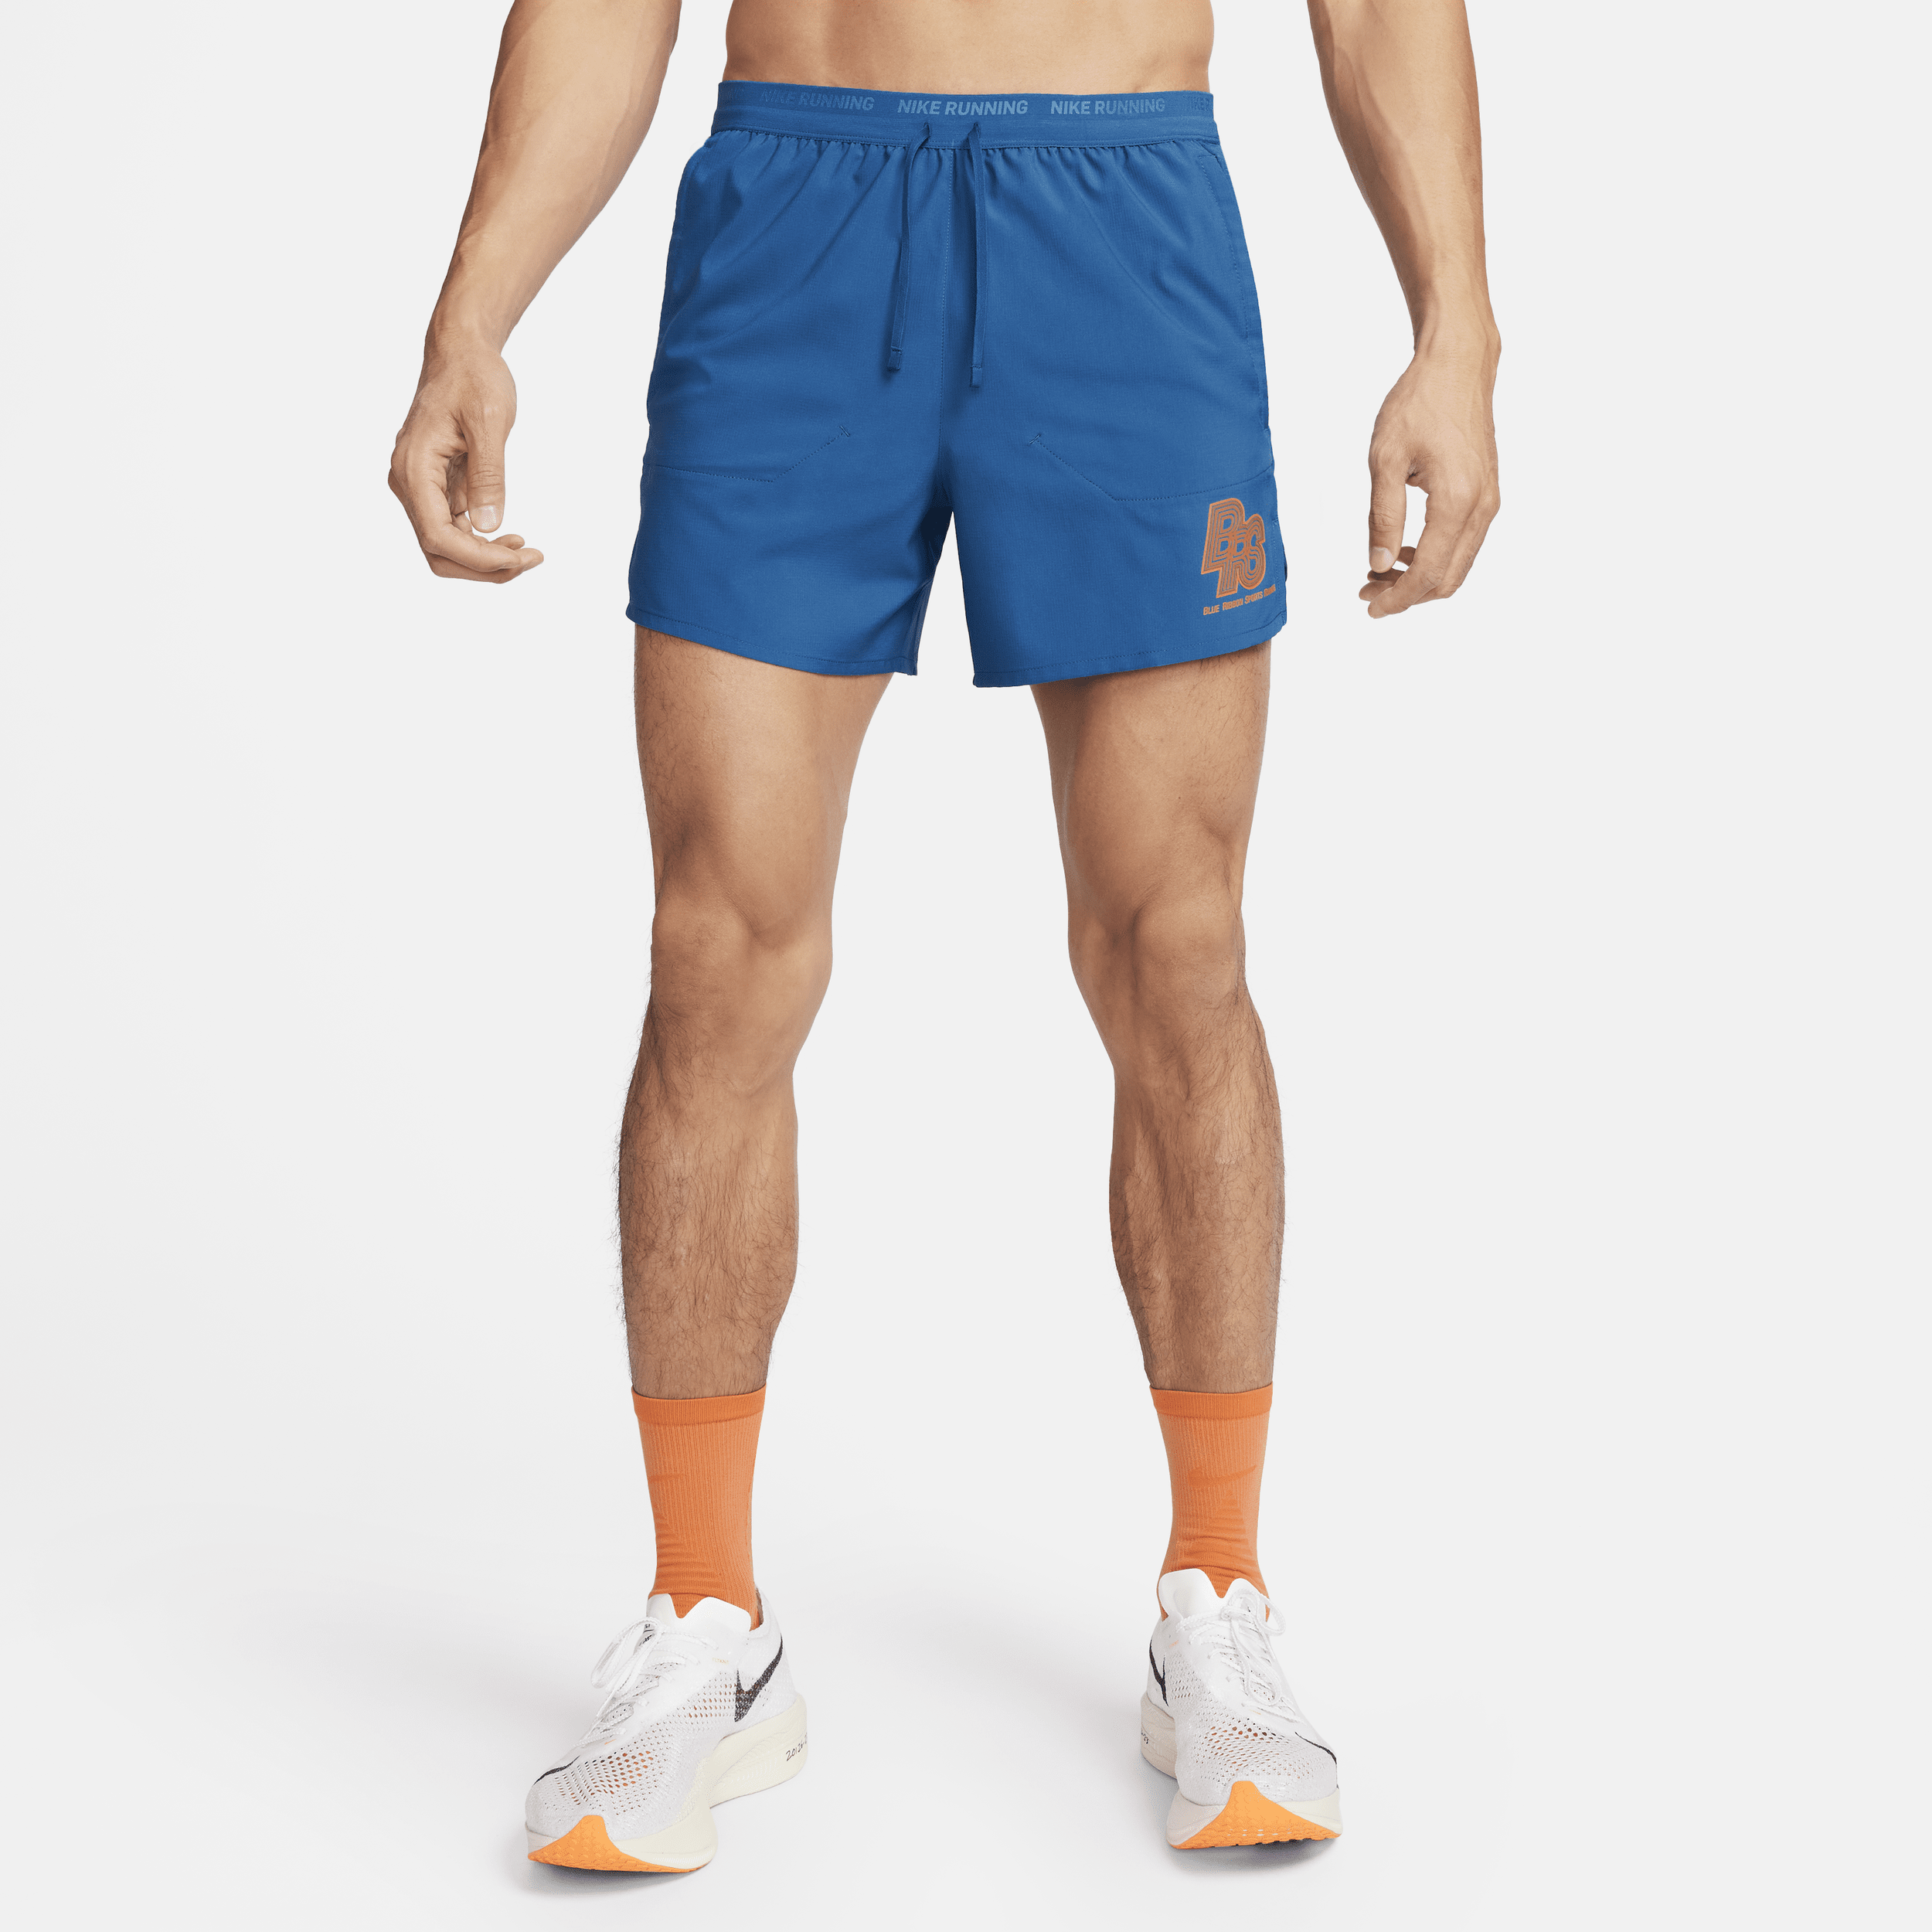 Shorts da running 13 cm con slip foderati Nike Running Energy Stride – Uomo - Blu